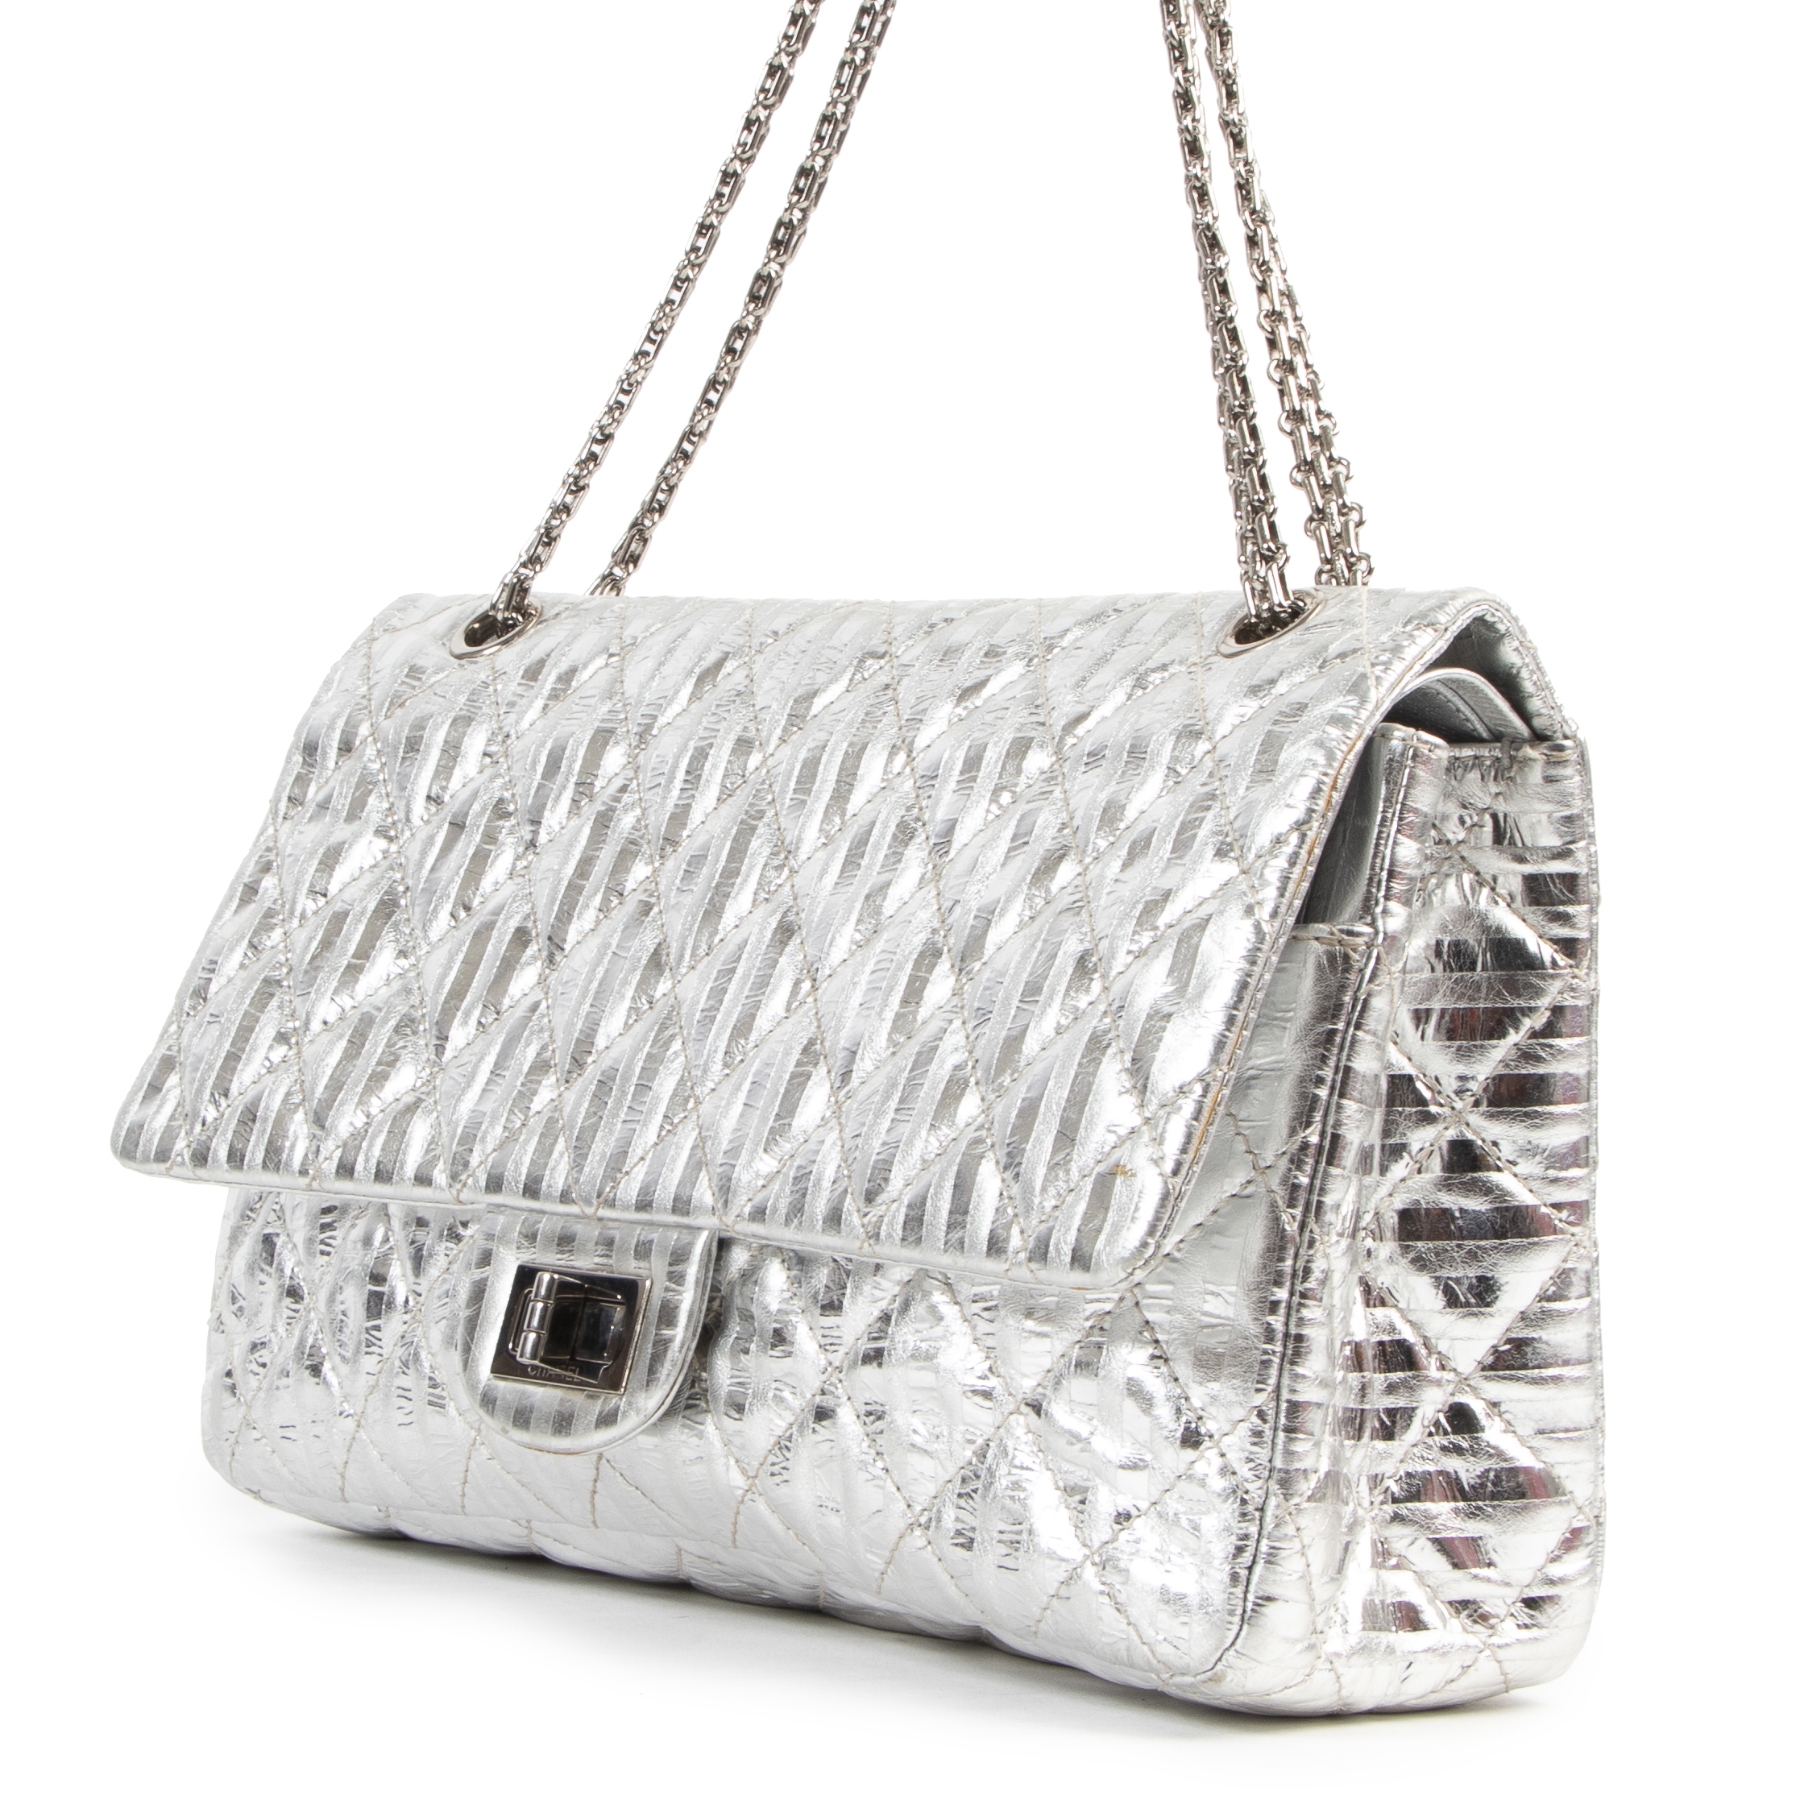 Chanel Classic Handbag Beigel